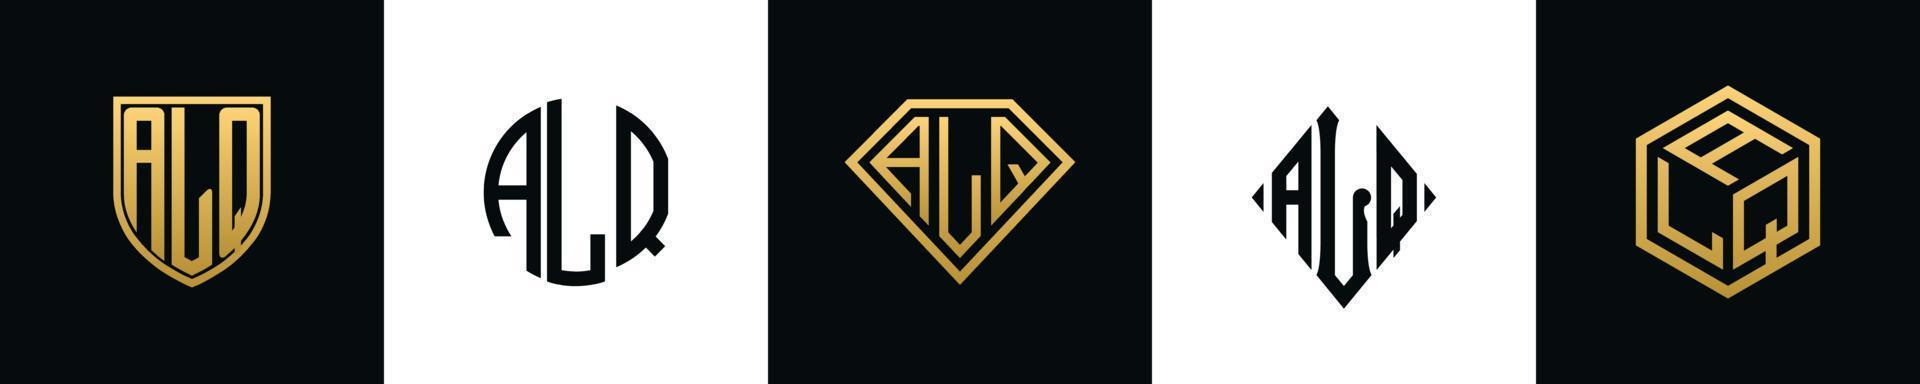 conjunto de letras iniciais alq logo designs vetor